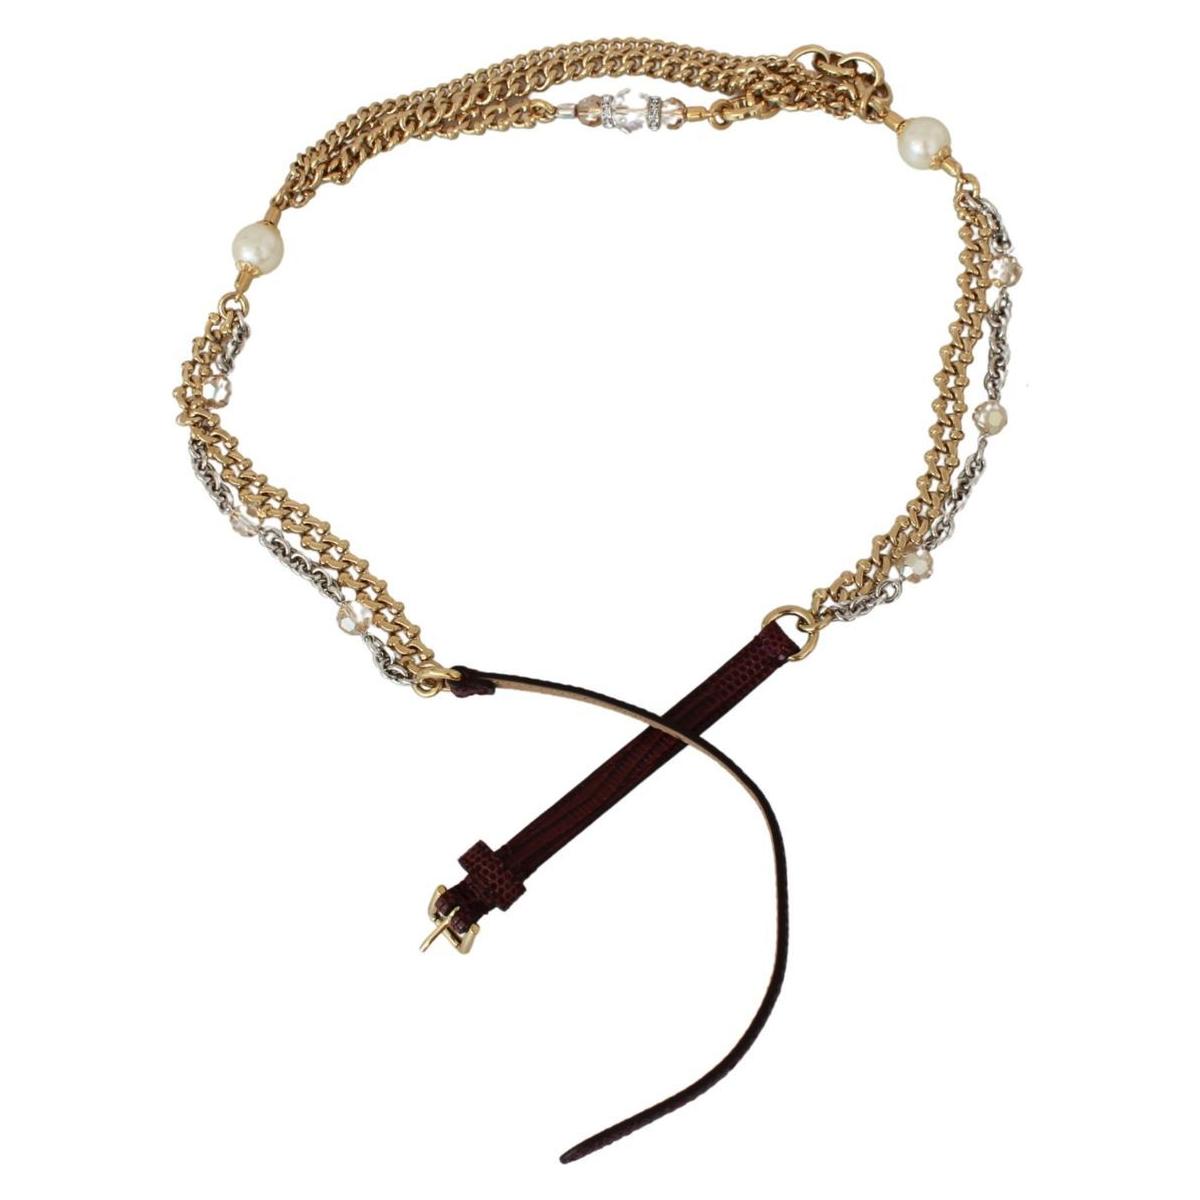 Dolce & Gabbana Crystal Studded Waist Belt in Purple purple-leather-gold-chain-crystal-waist-belt Belt IMG_1606-dc2c5587-8f9.jpg